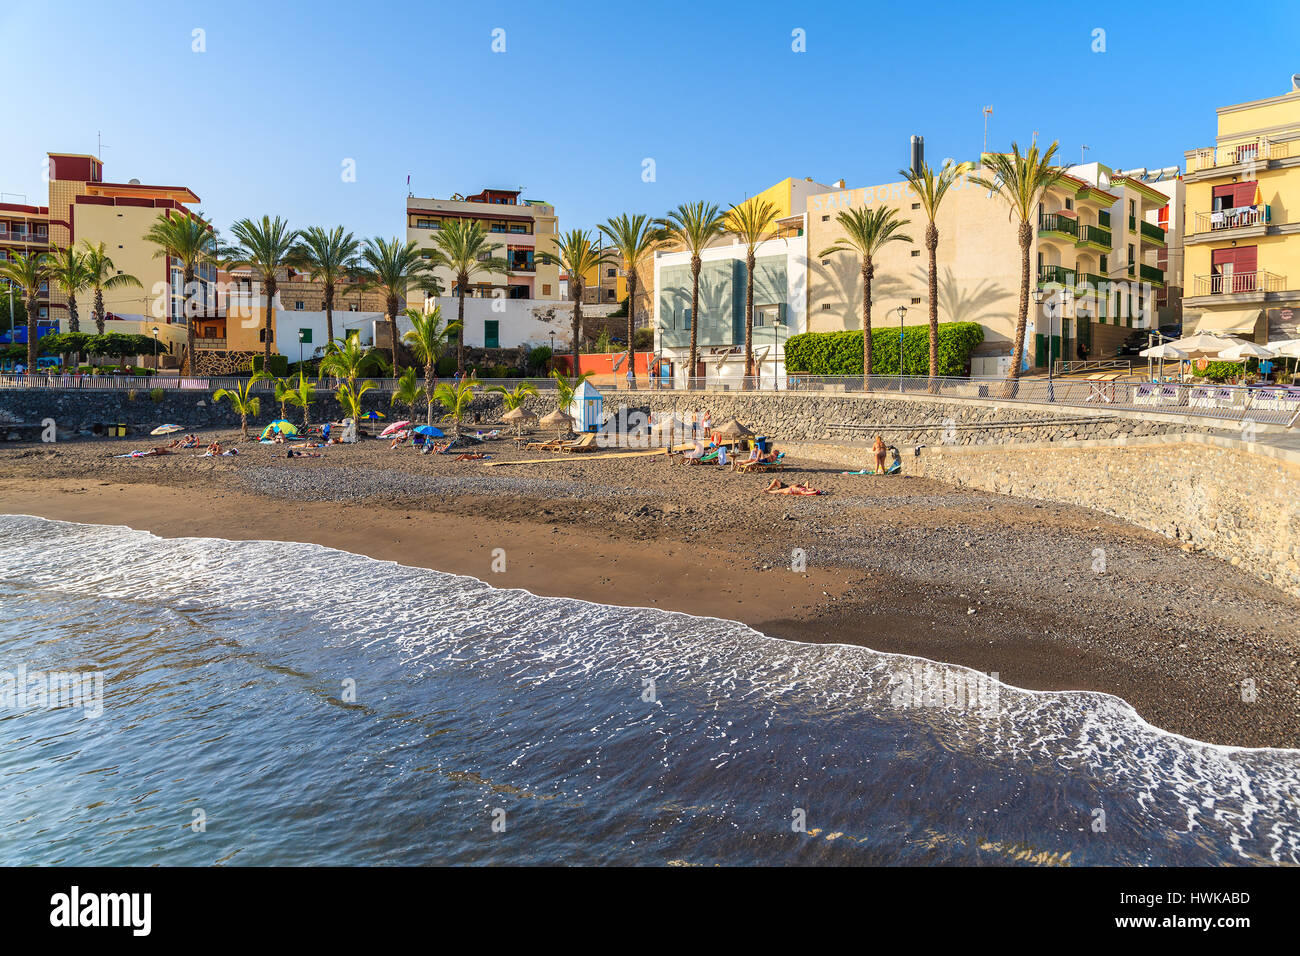 SAN JUAN BEACH, TENERIFE ISLAND - NOV 15, 2015: ocean wave and beautiful beach in San Juan coastal town, Tenerife island, Spain. Stock Photo